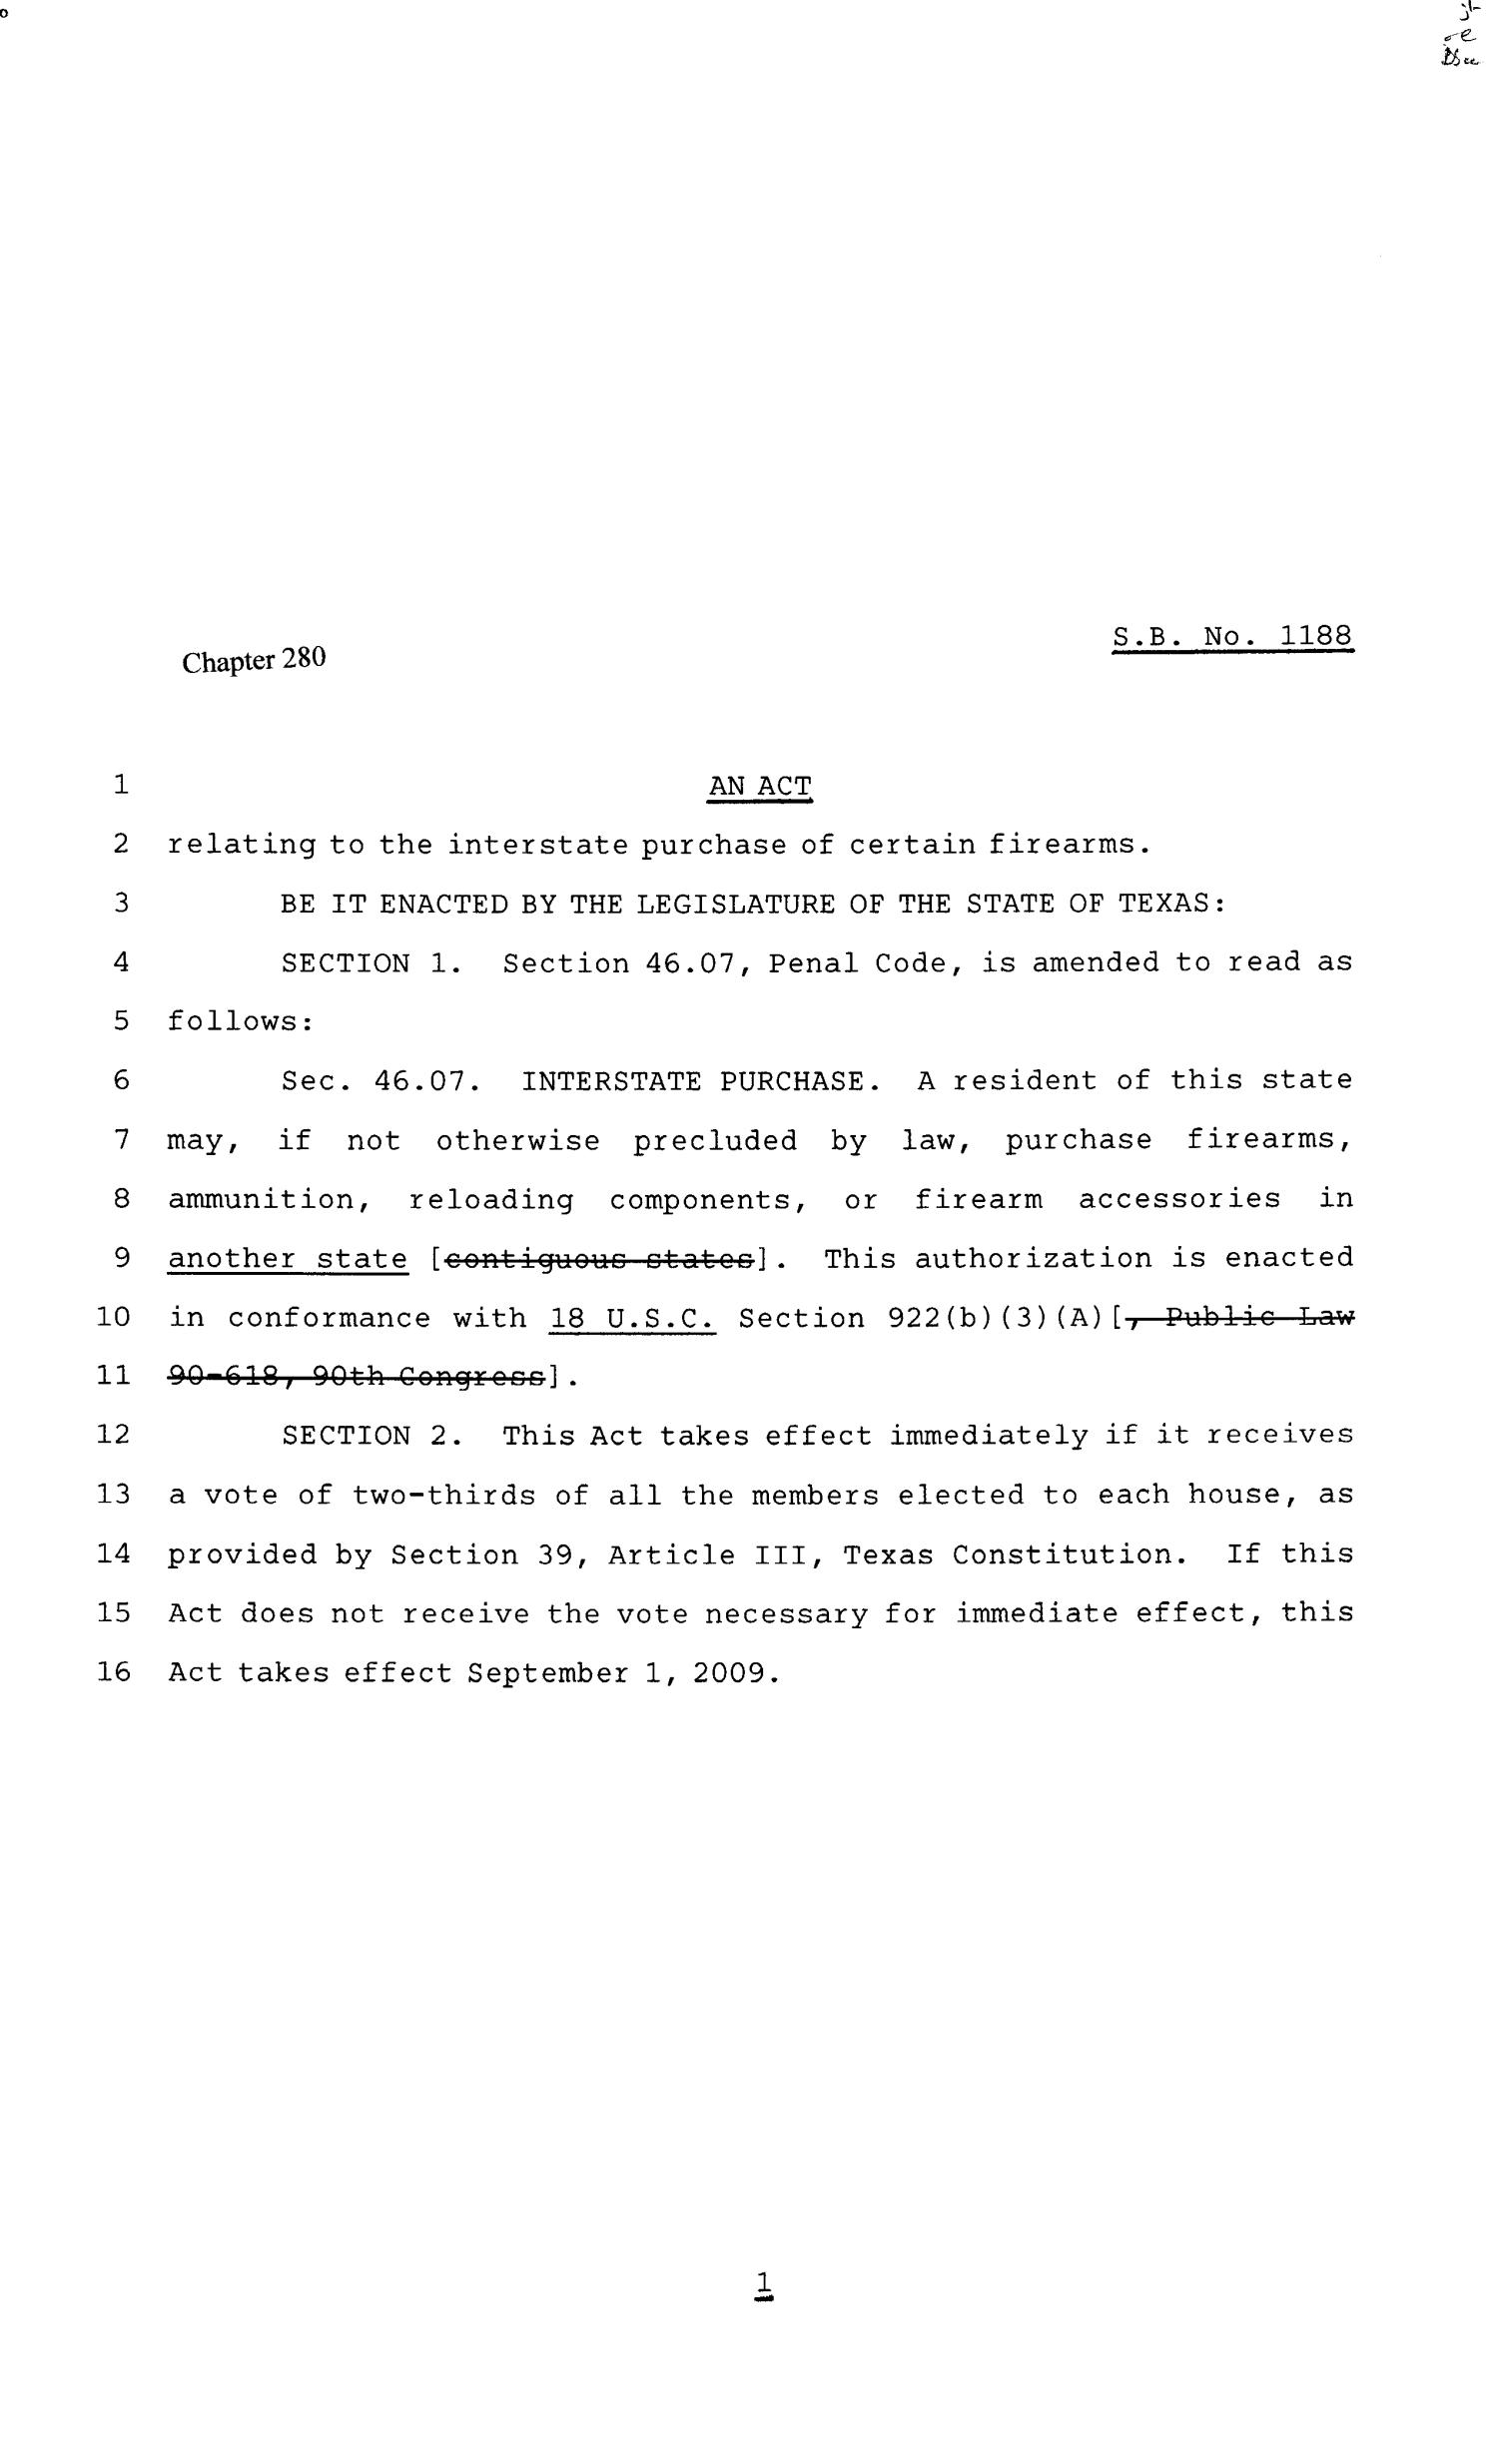 81st Texas Legislature, House Bill 1188, Chapter 280
                                                
                                                    [Sequence #]: 1 of 2
                                                